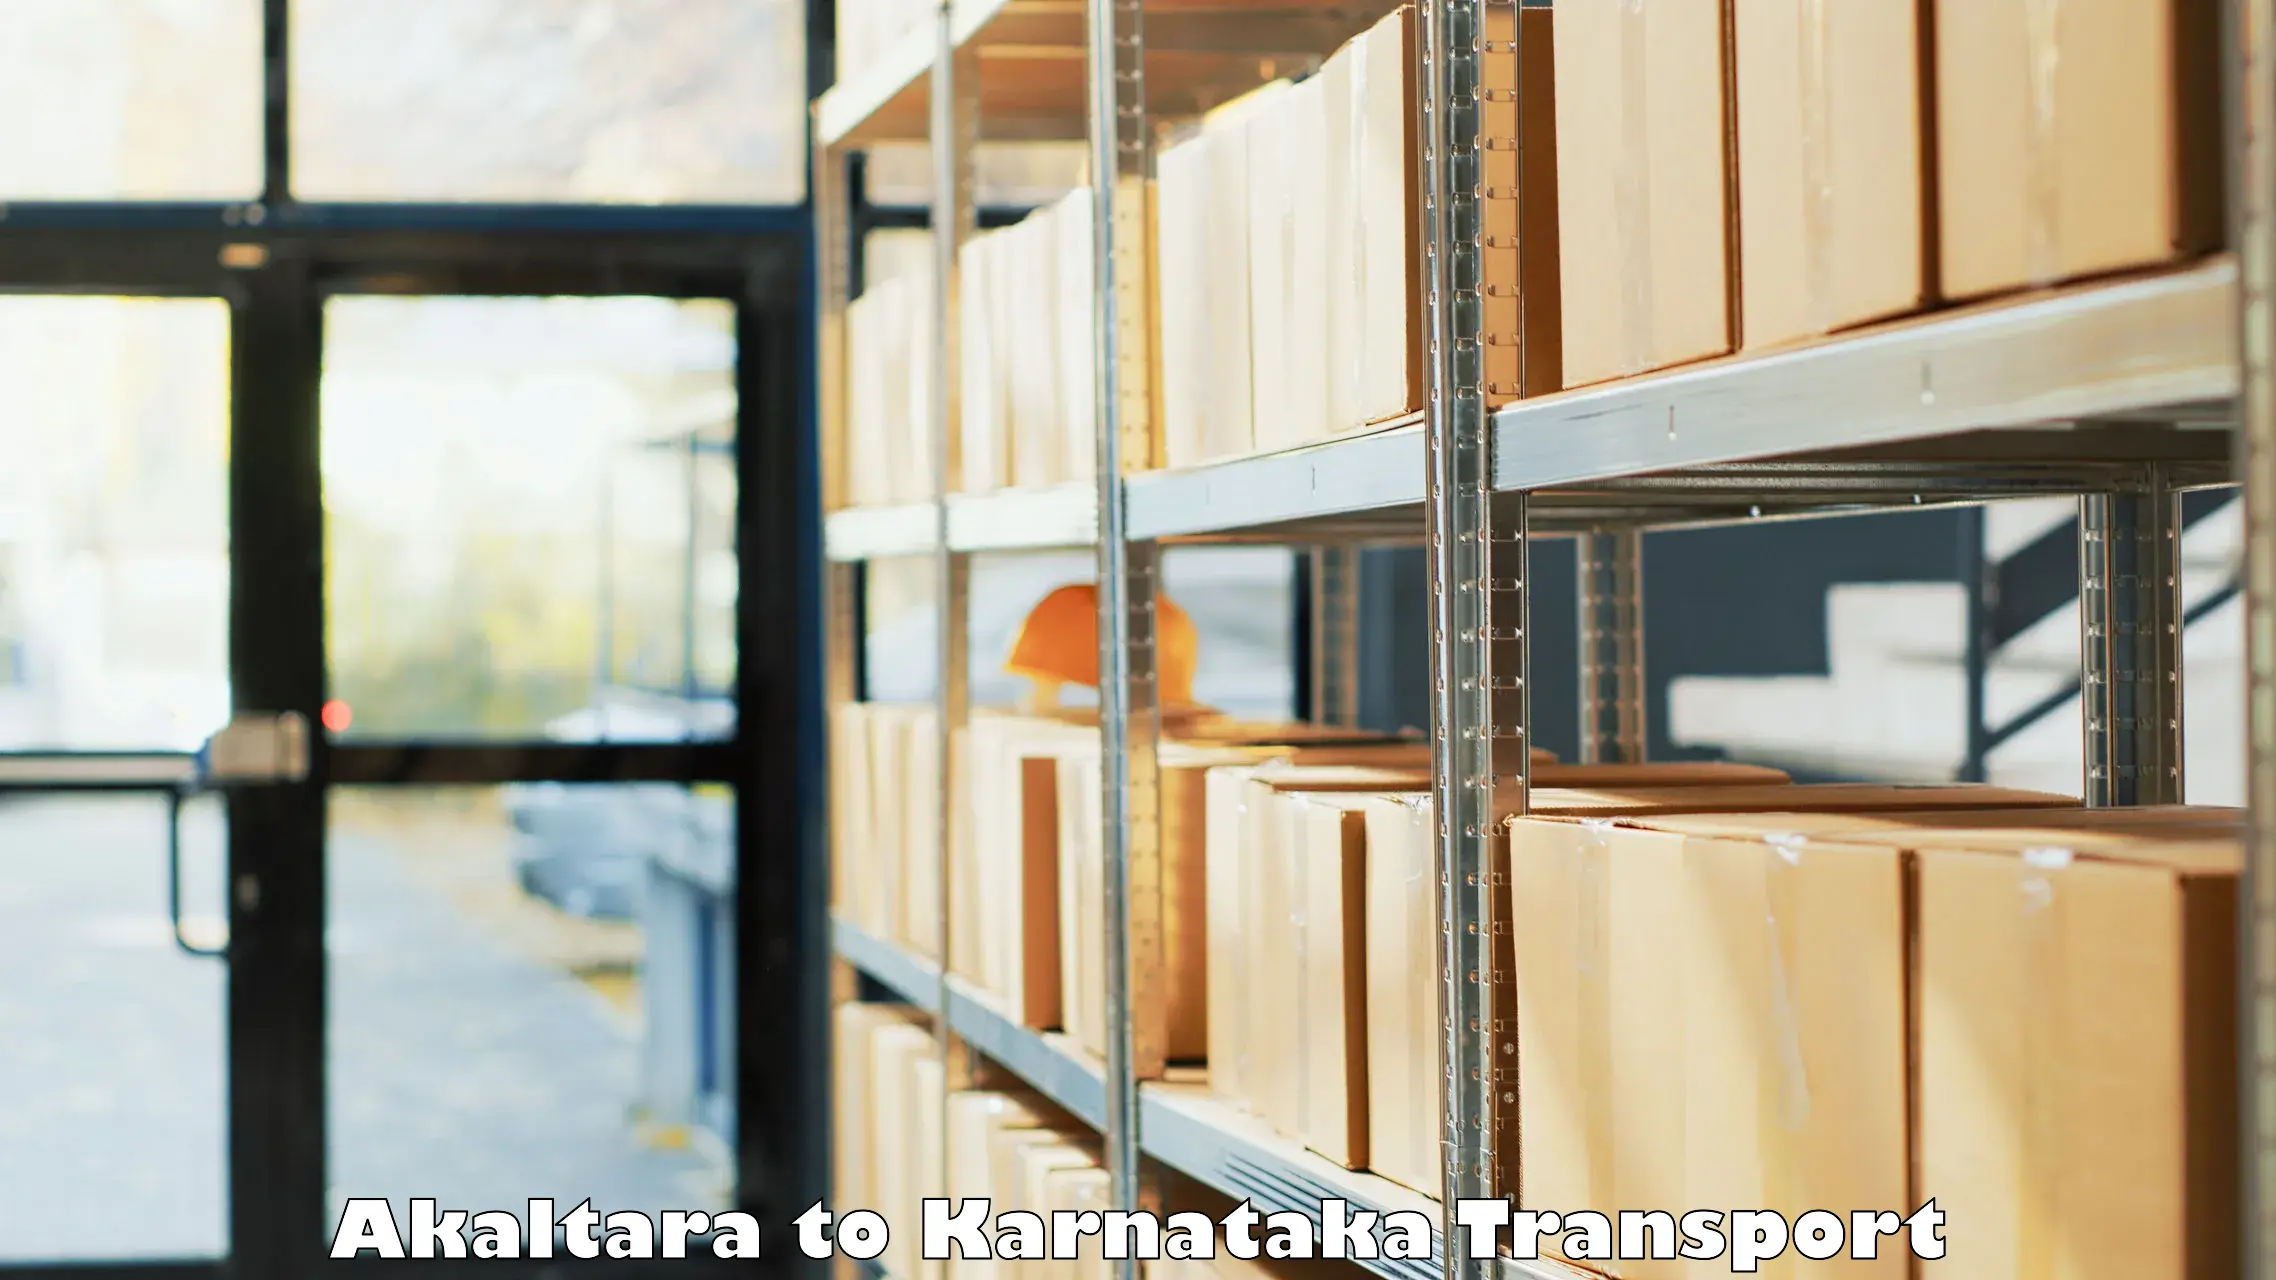 Goods delivery service Akaltara to Mysore